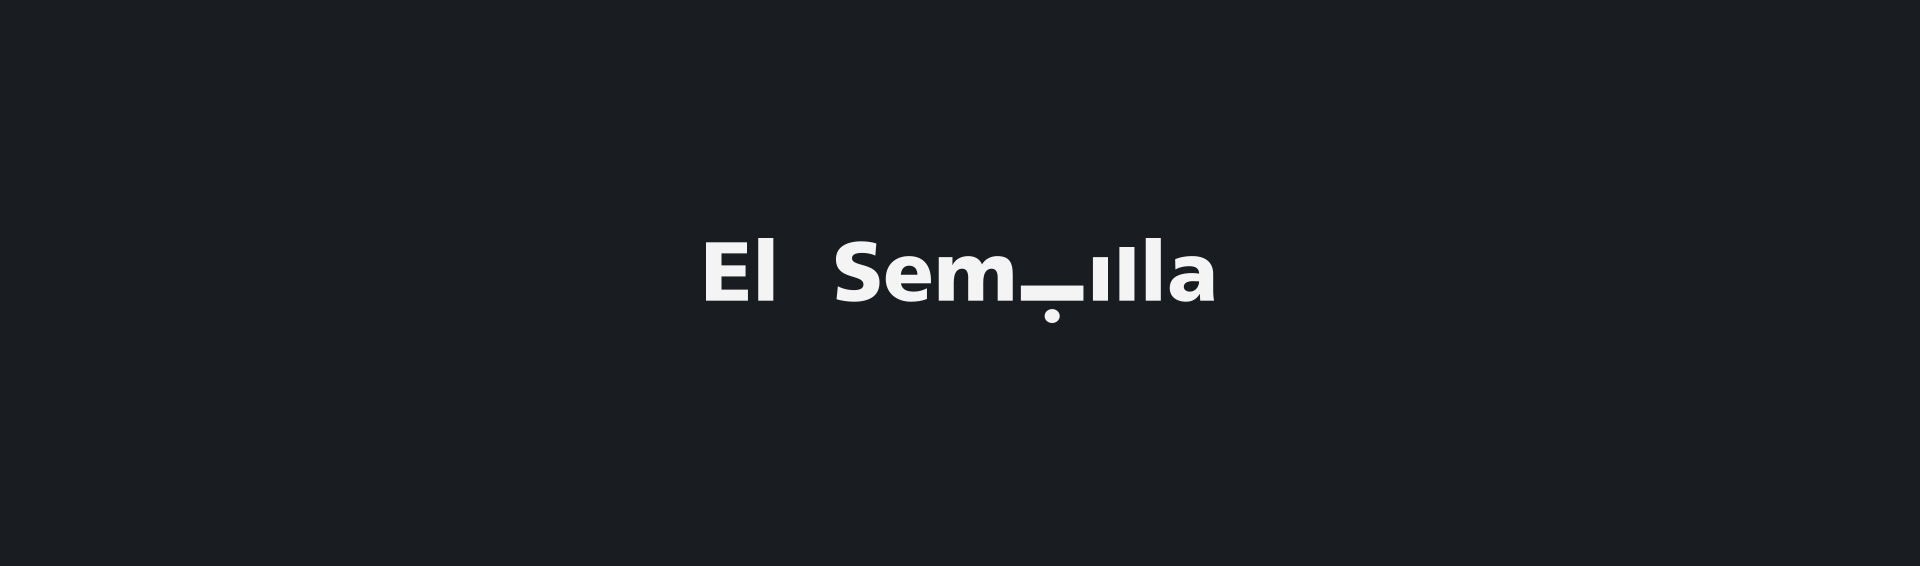 elsemilla_logotype_identity_corporate